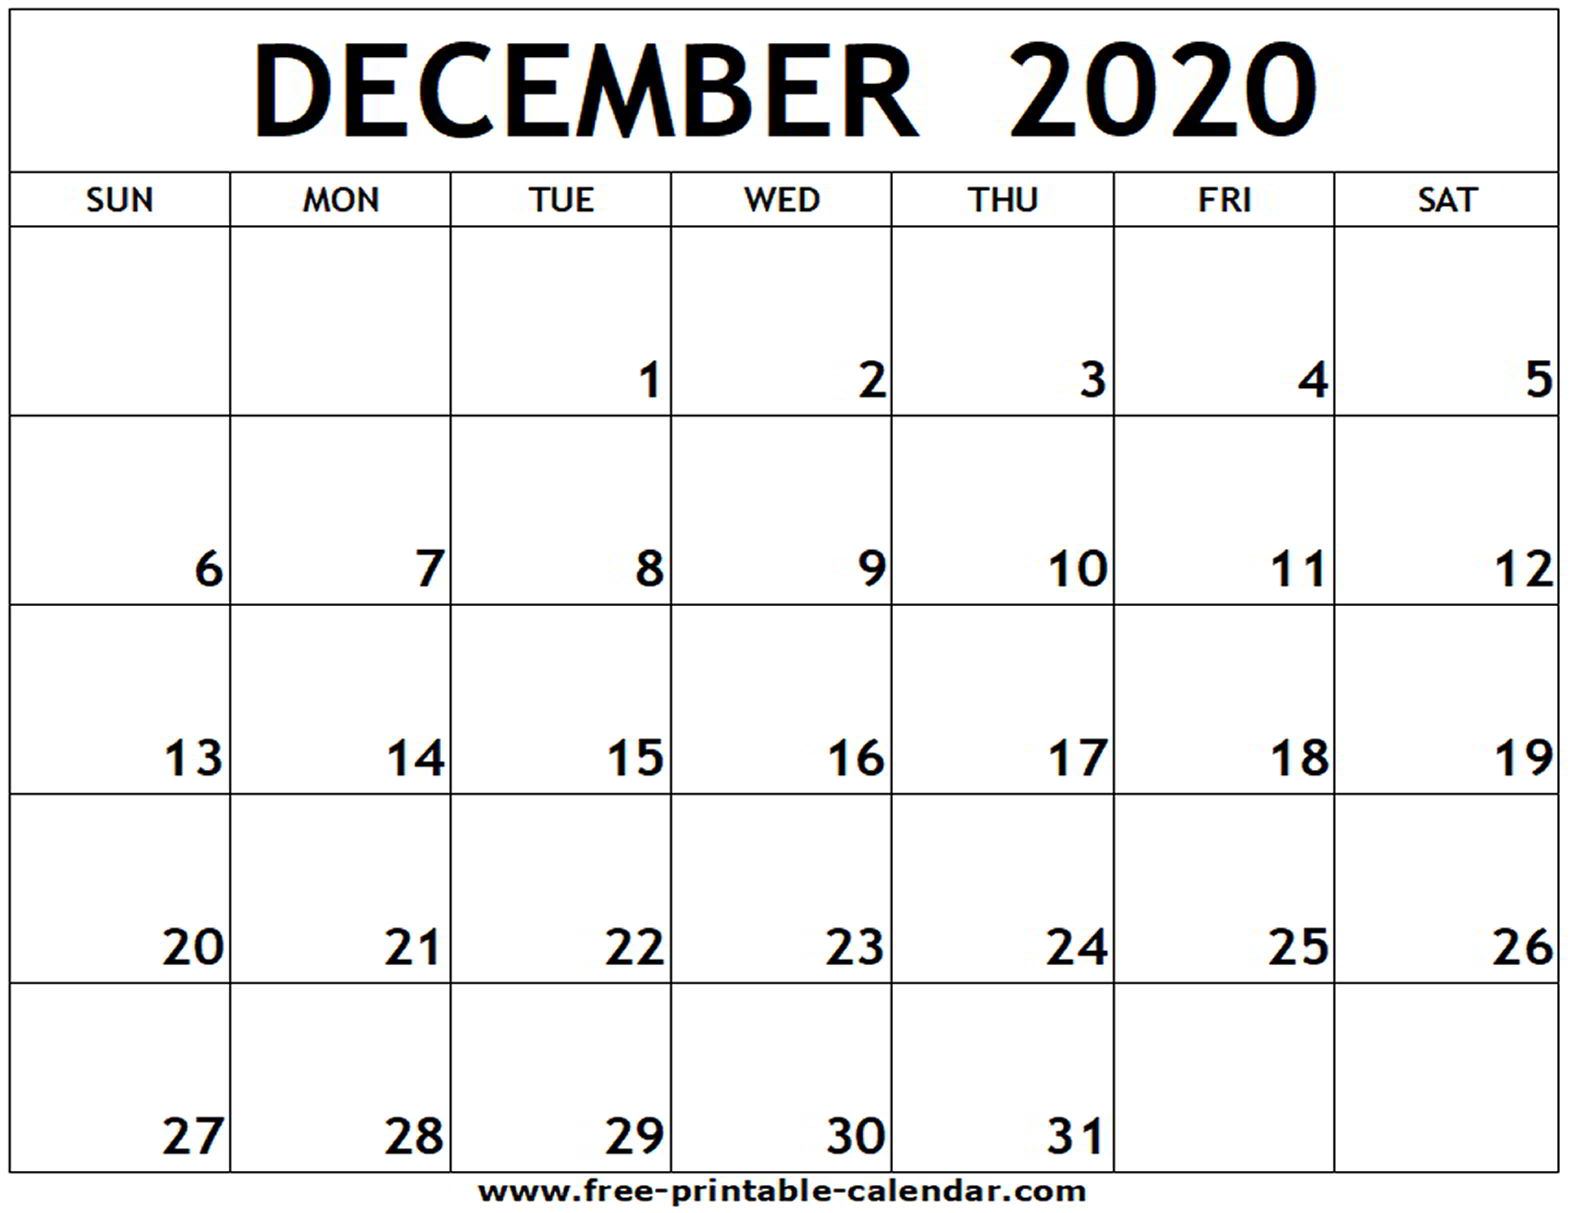 Calendar Template Dec 2020 - Wpa.wpart.co